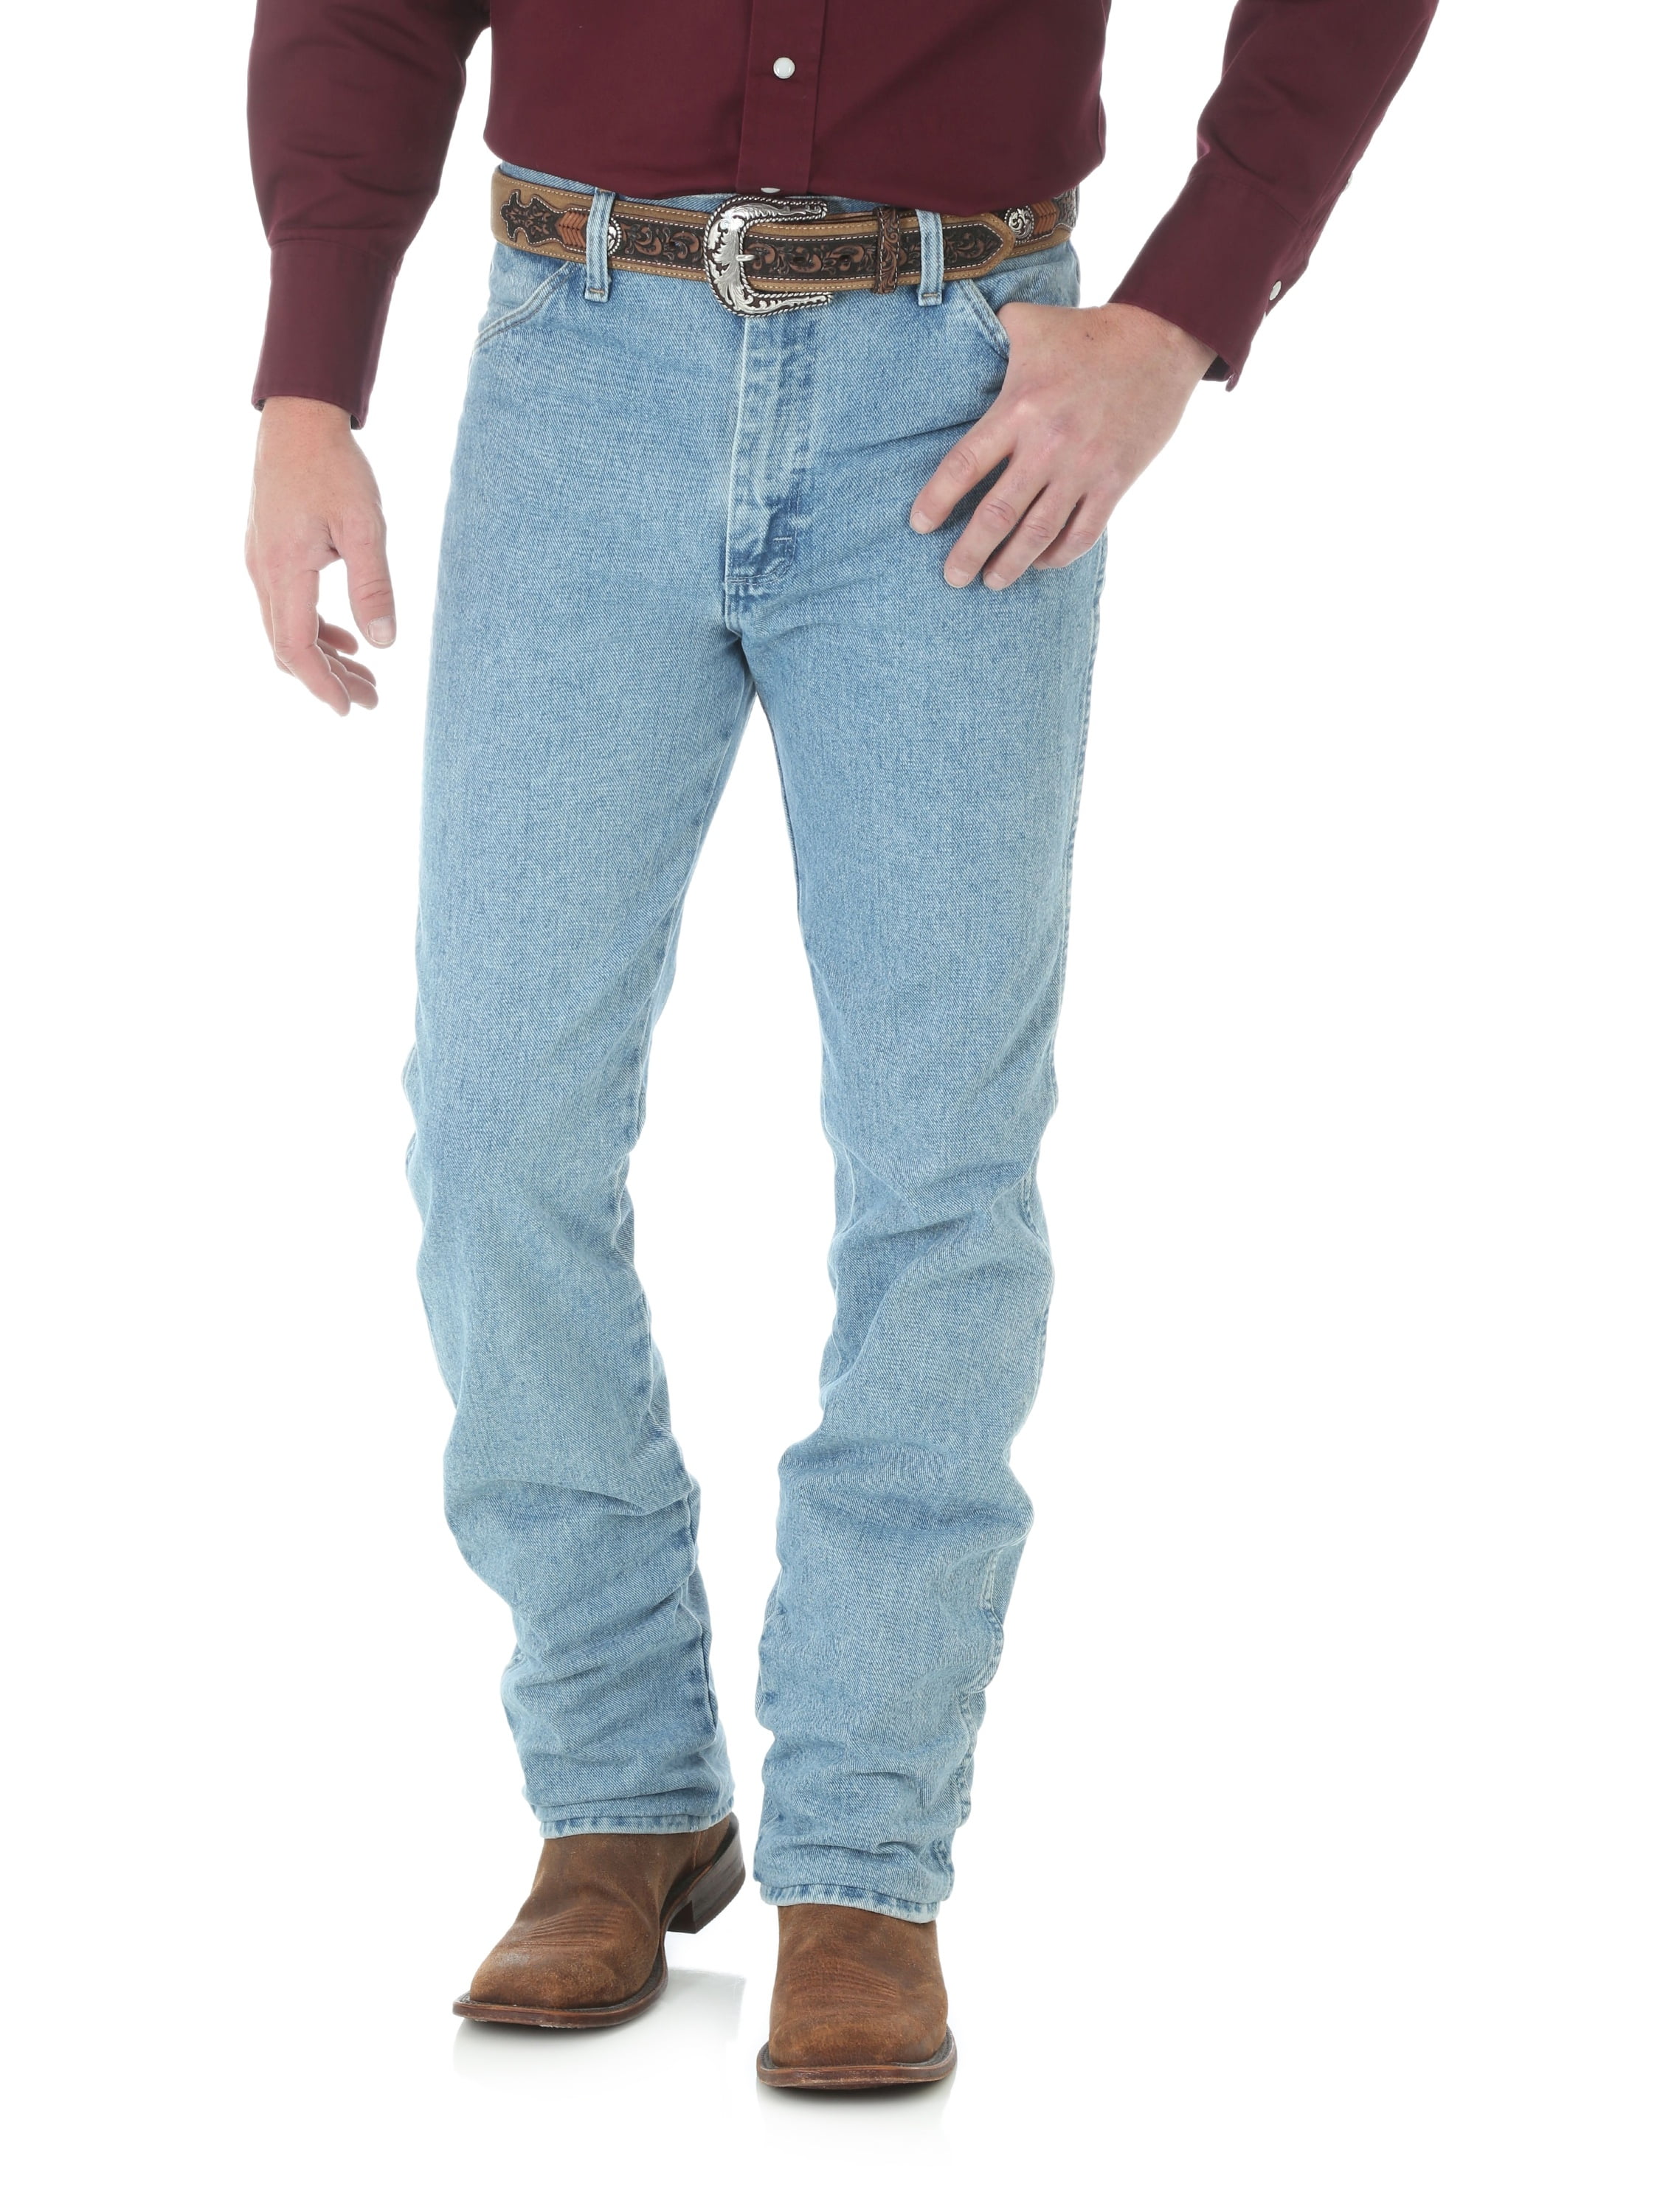 wrangler western jeans